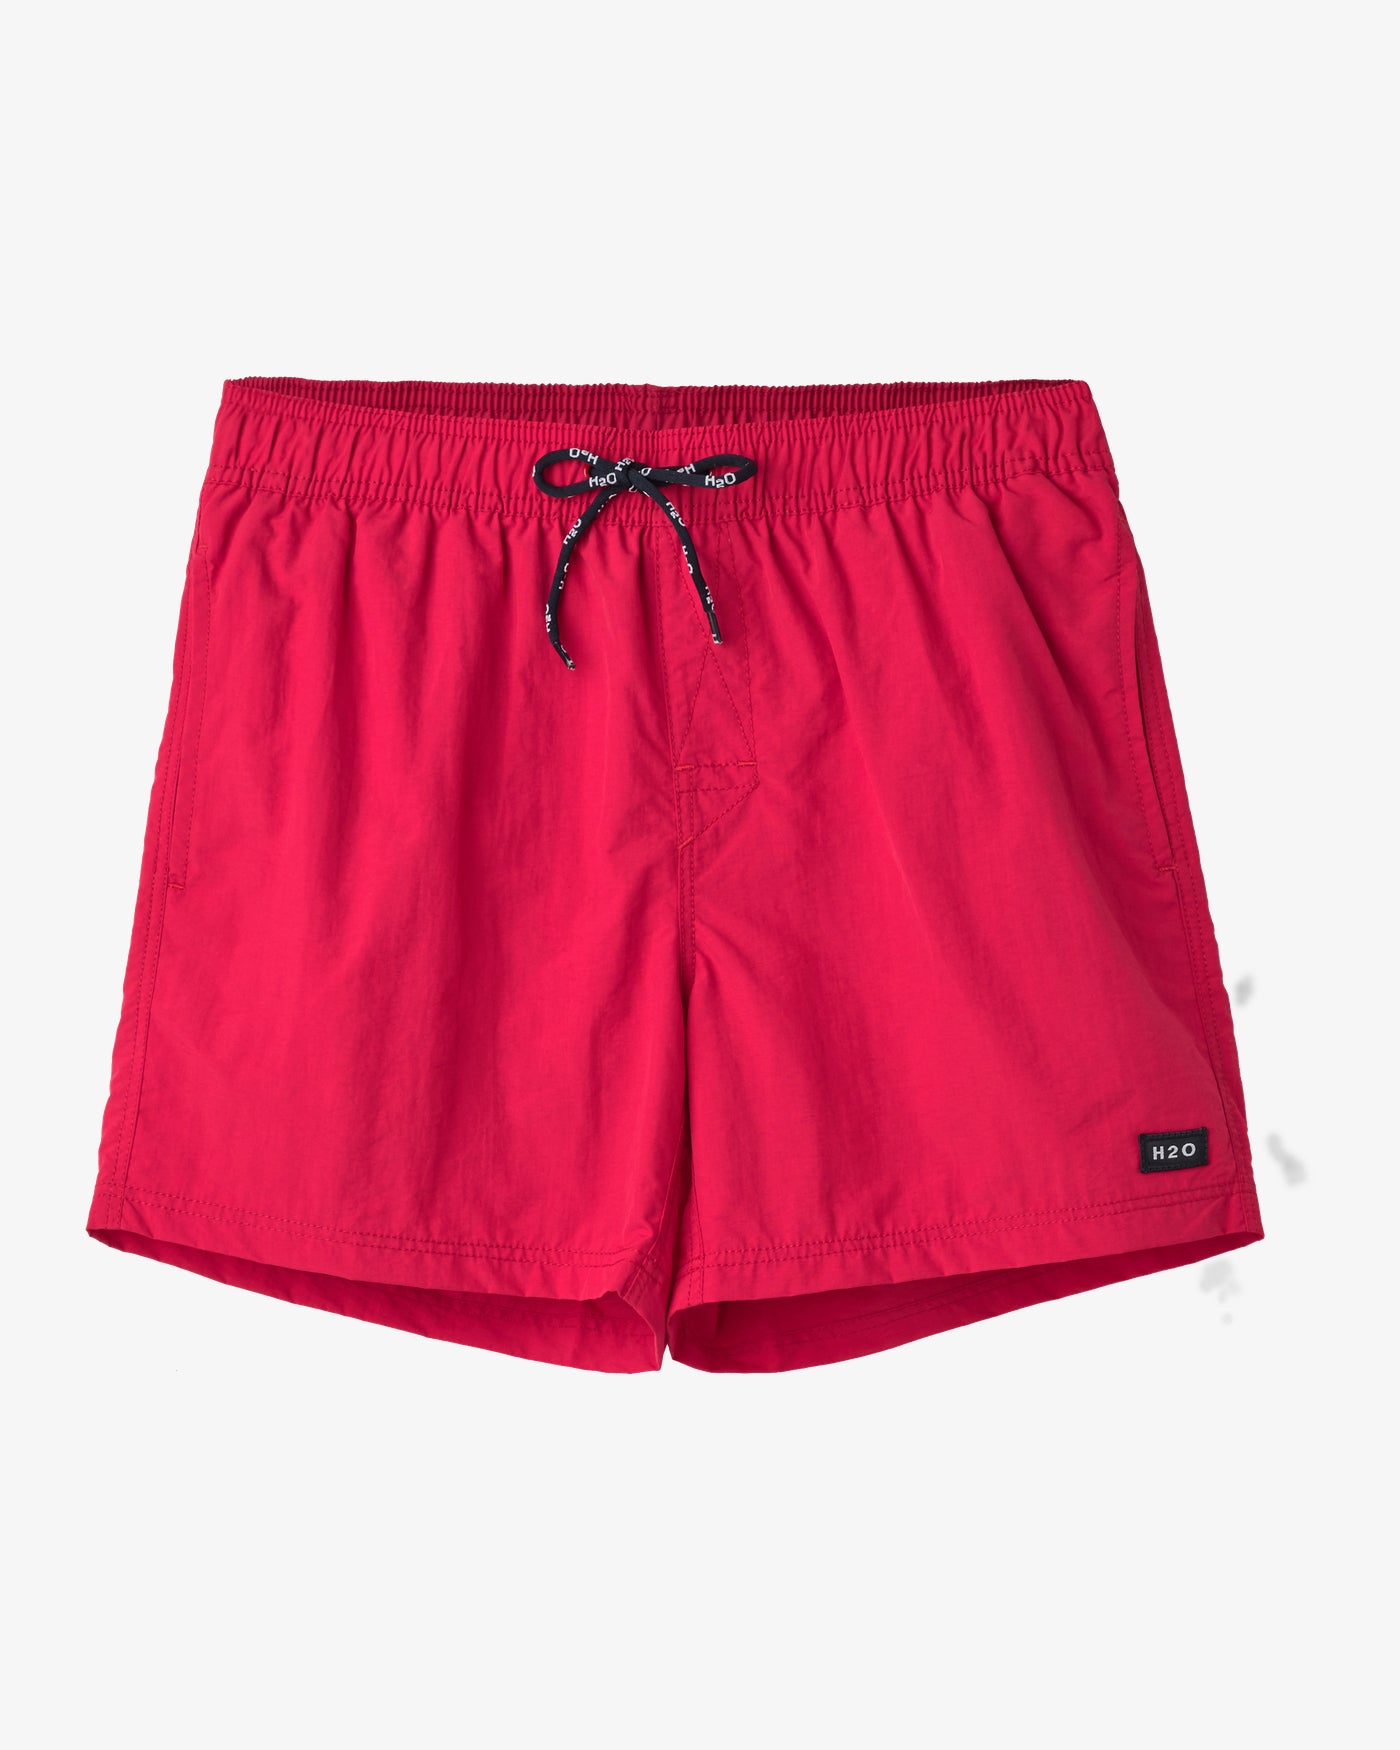 Leisure Swim Shorts - Red